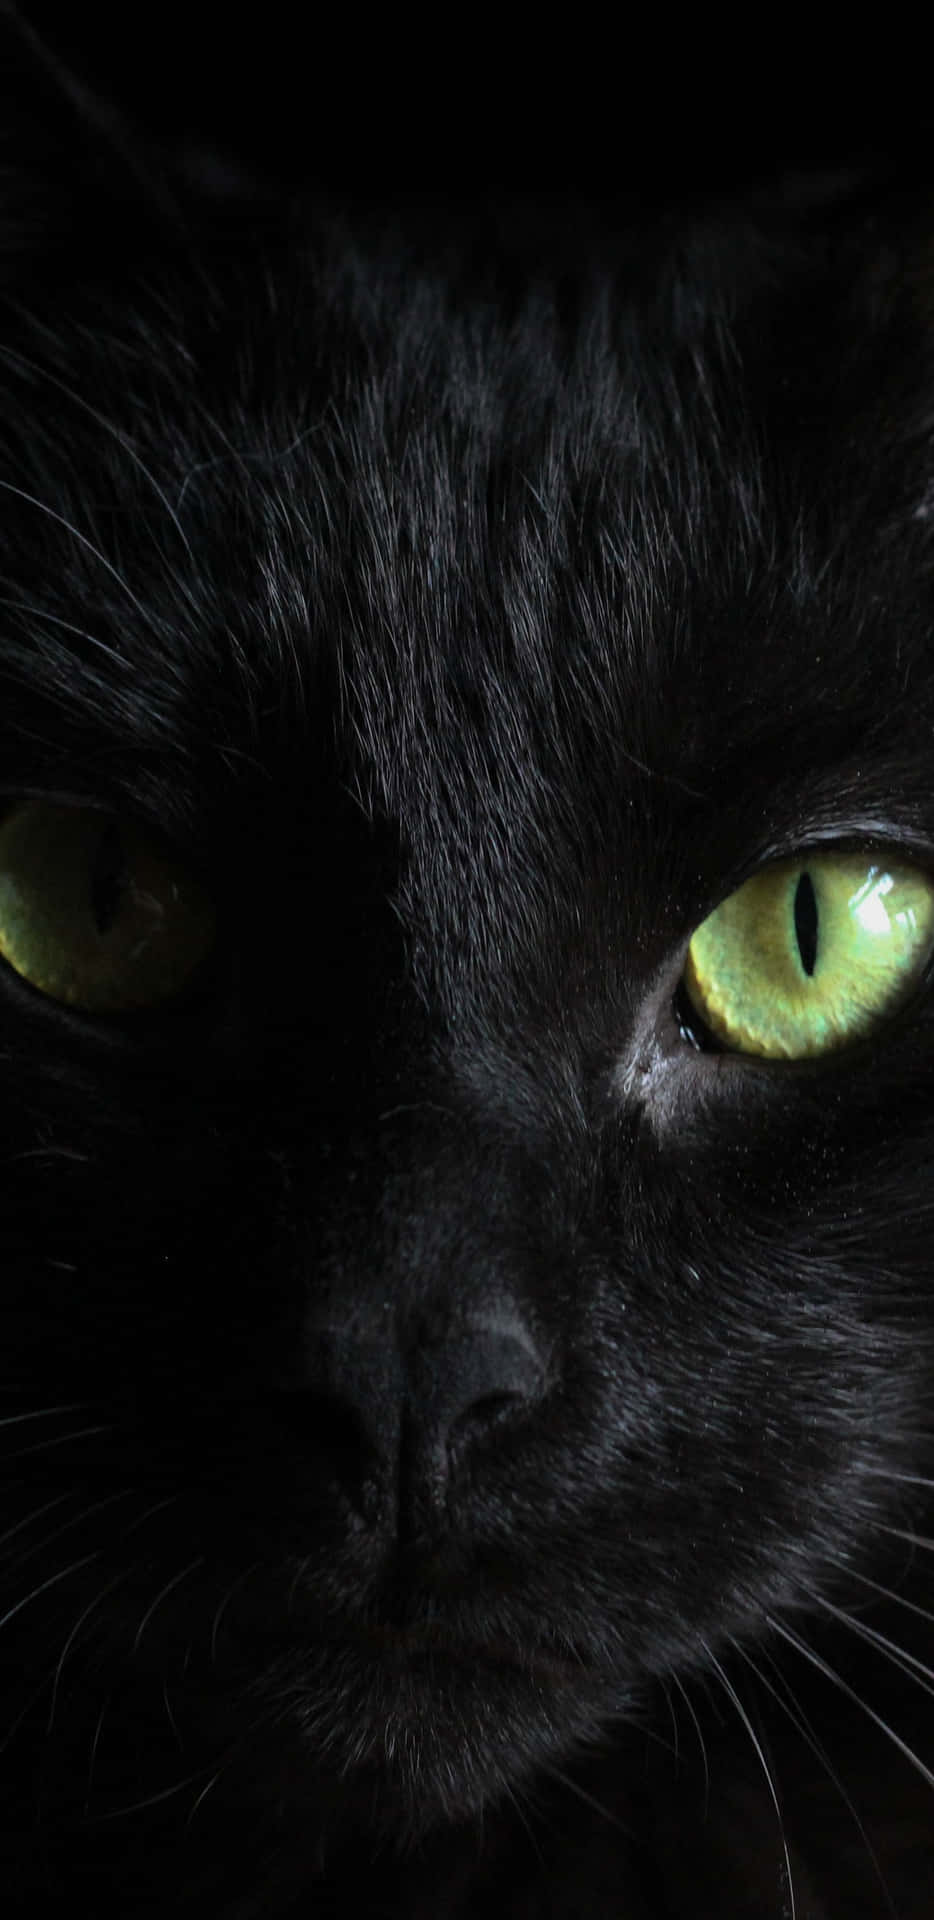 Black Cat With Green Eyes Portrait Wallpaper